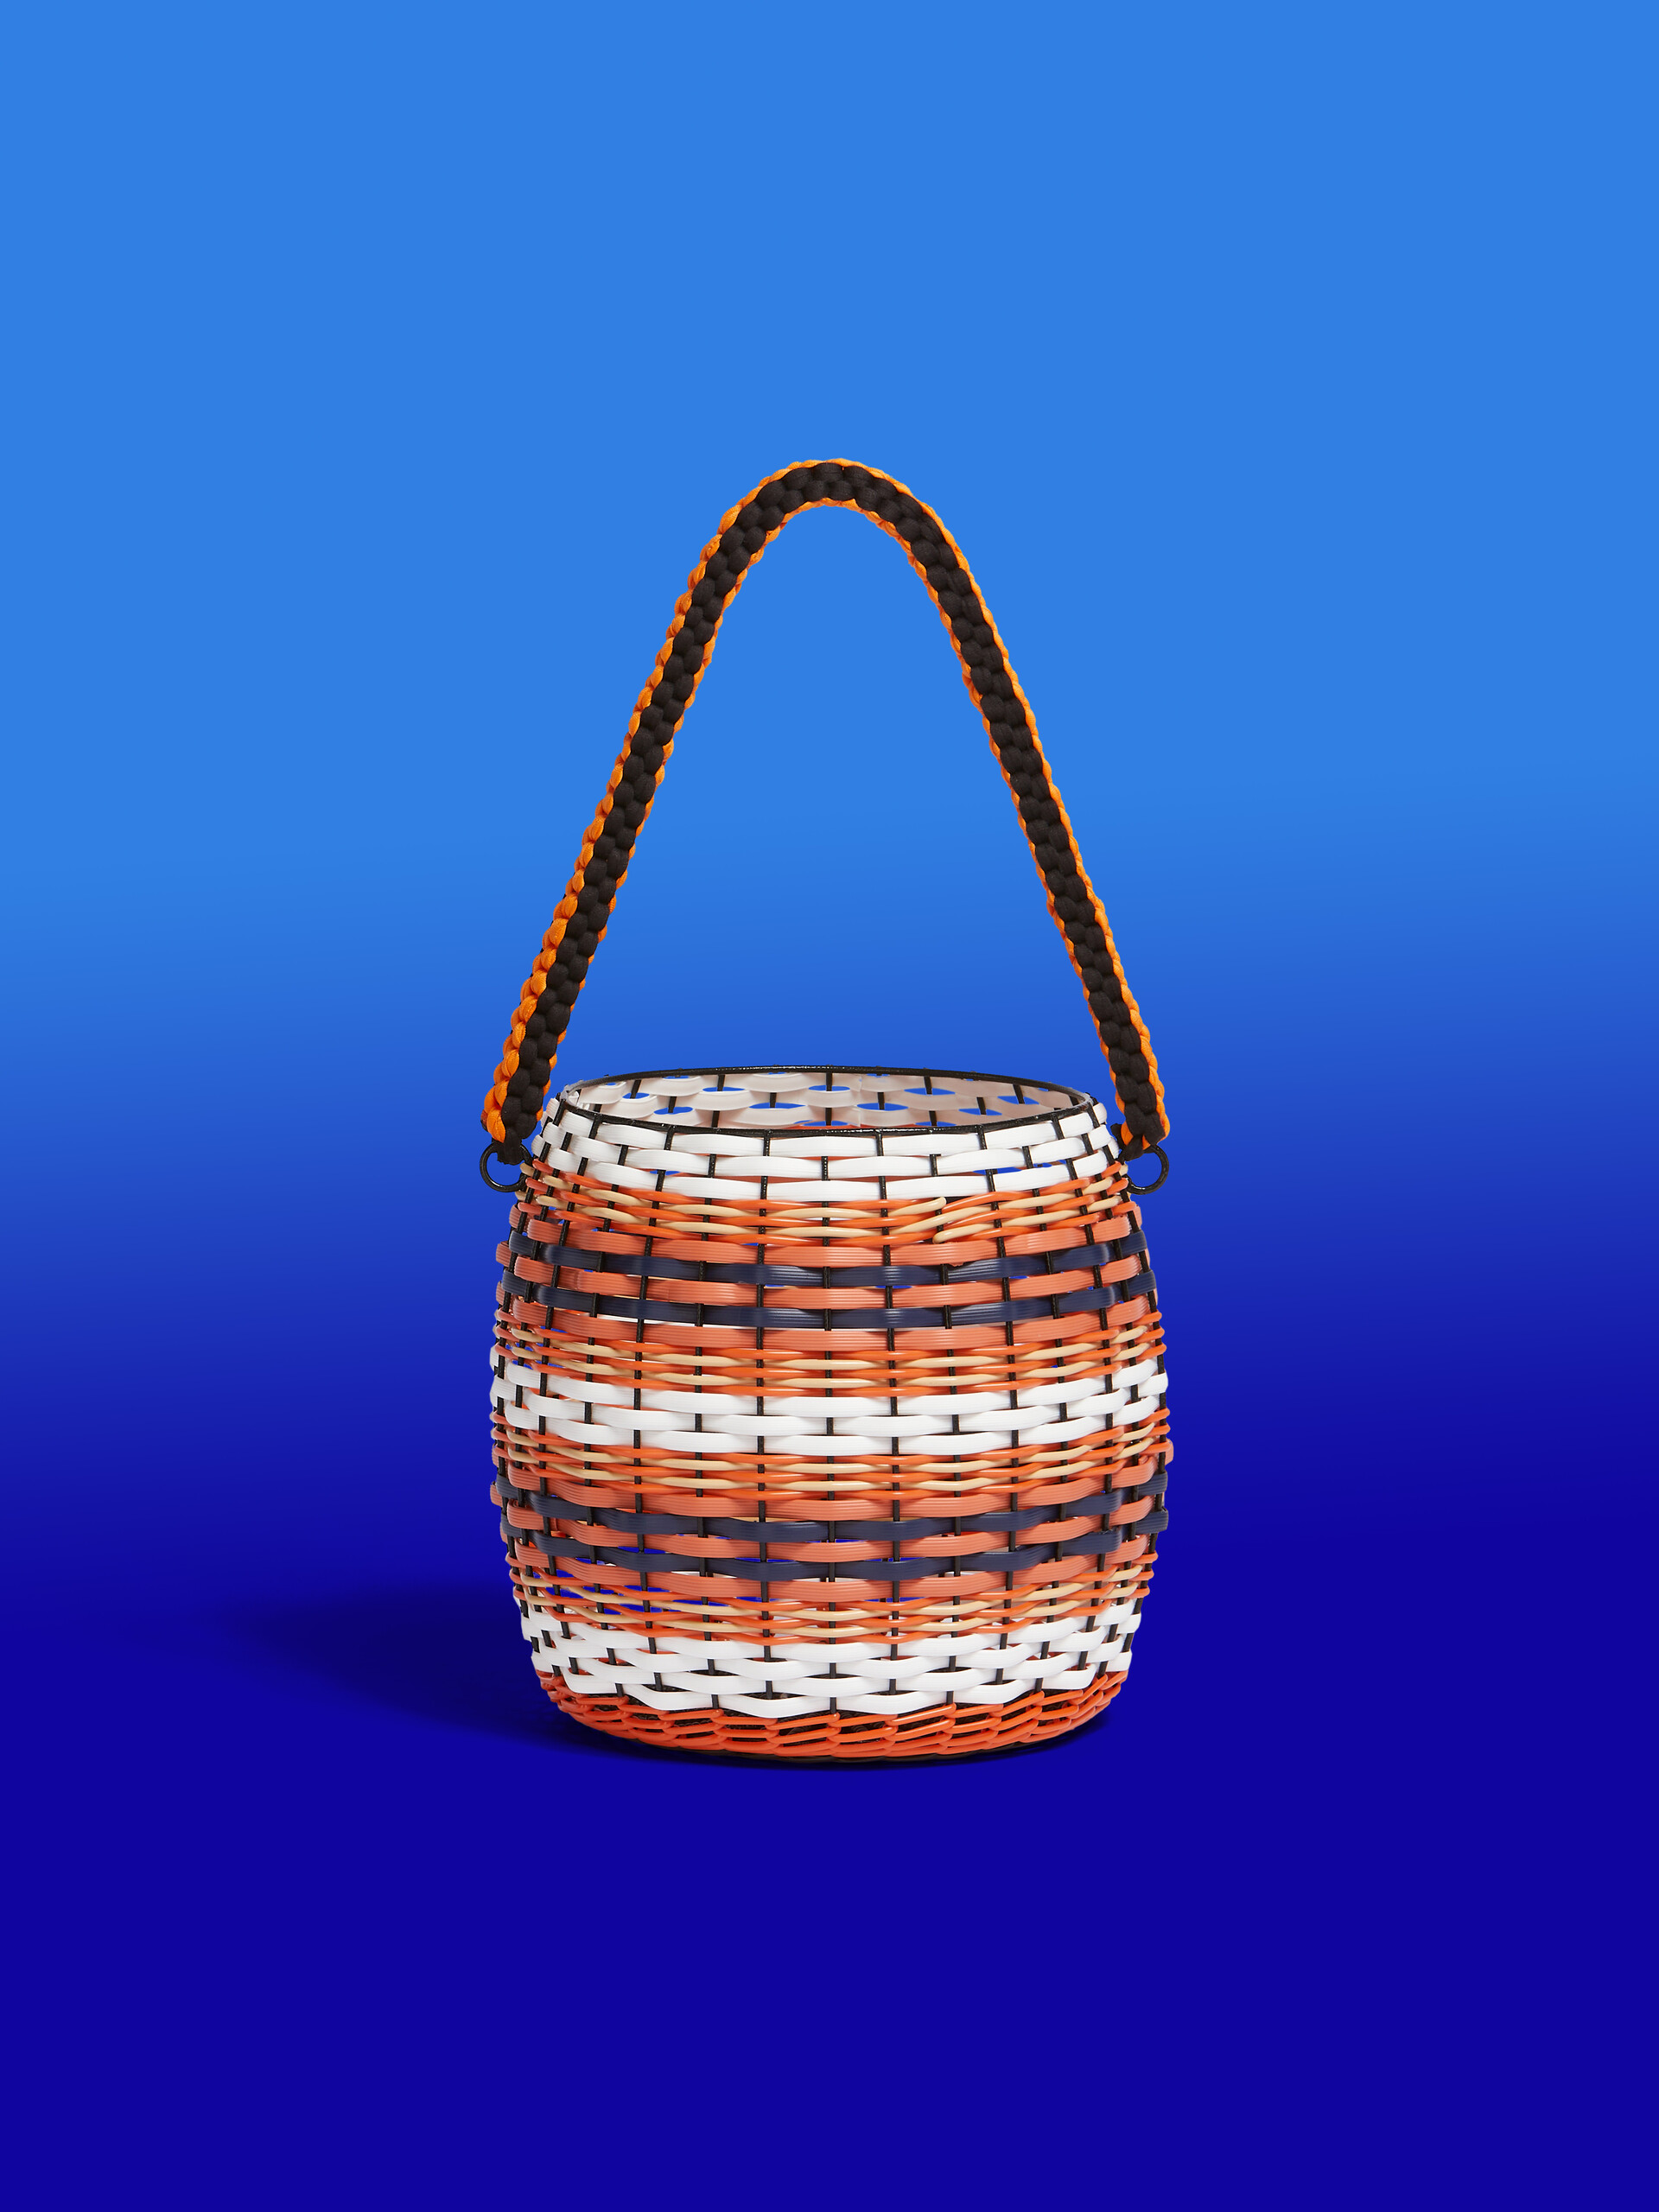 Orange and white MARNI MARKET woven cable basket - Accessories - Image 1